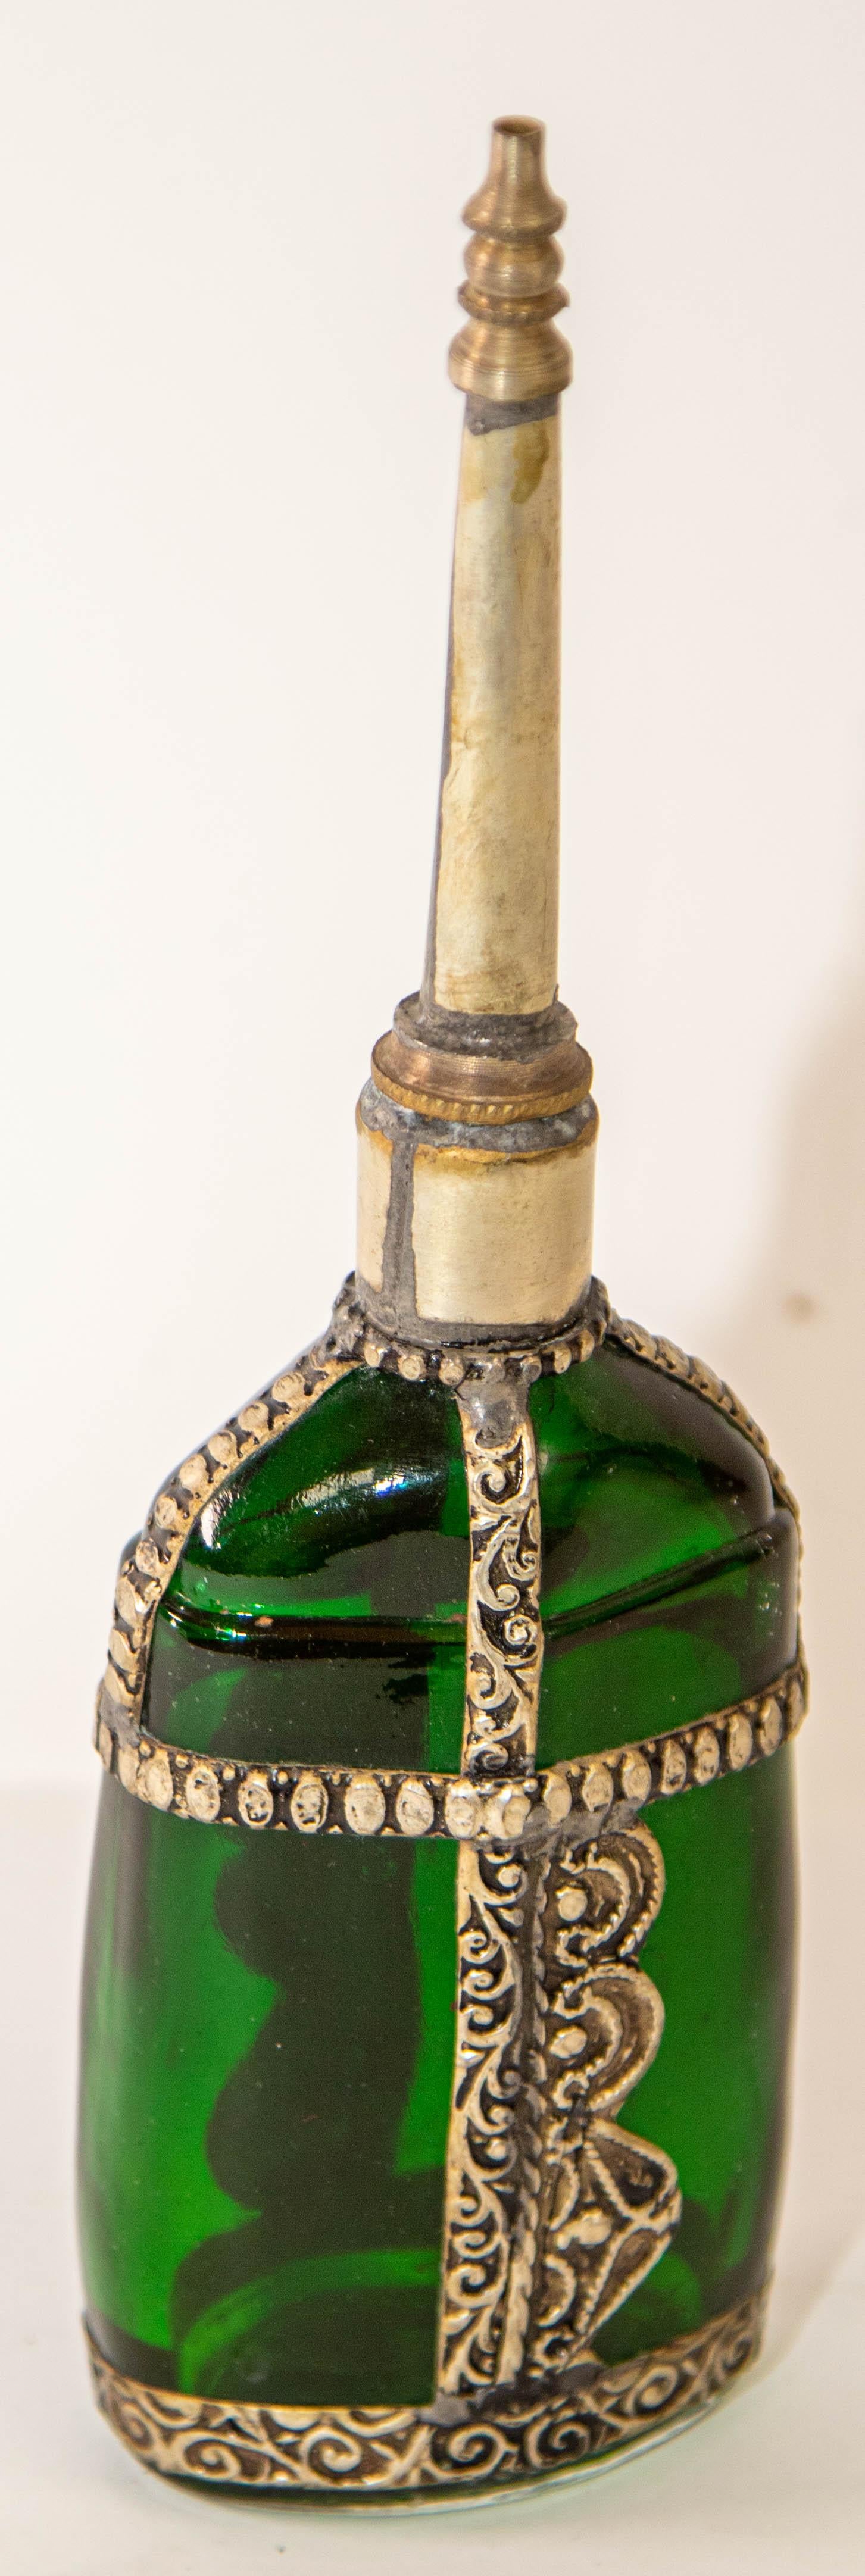 Moorish Green Glass Perfume Bottle Sprinkler with Embossed Metal Overlay For Sale 1